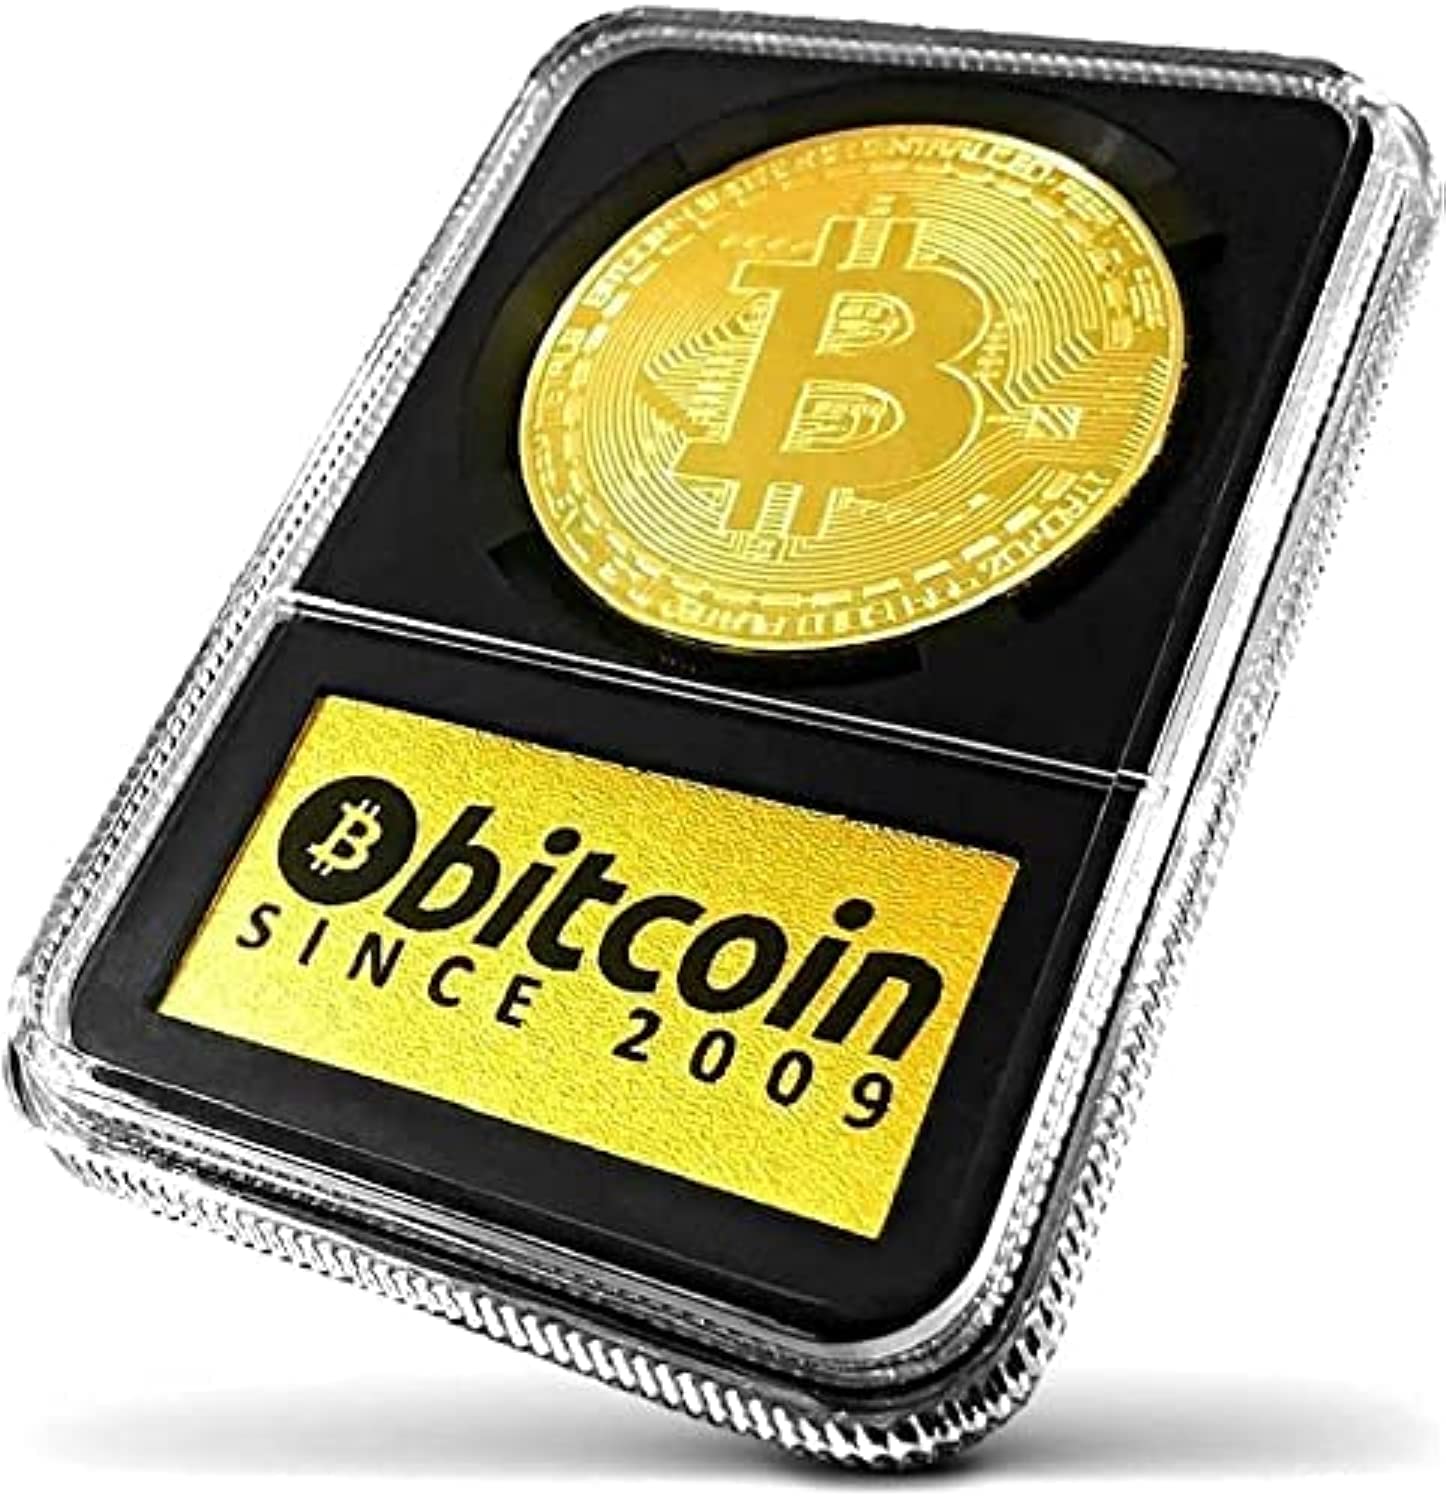 Bitcoin gold coin. Cryptocurrency concept. фотография Stock | Adobe Stock